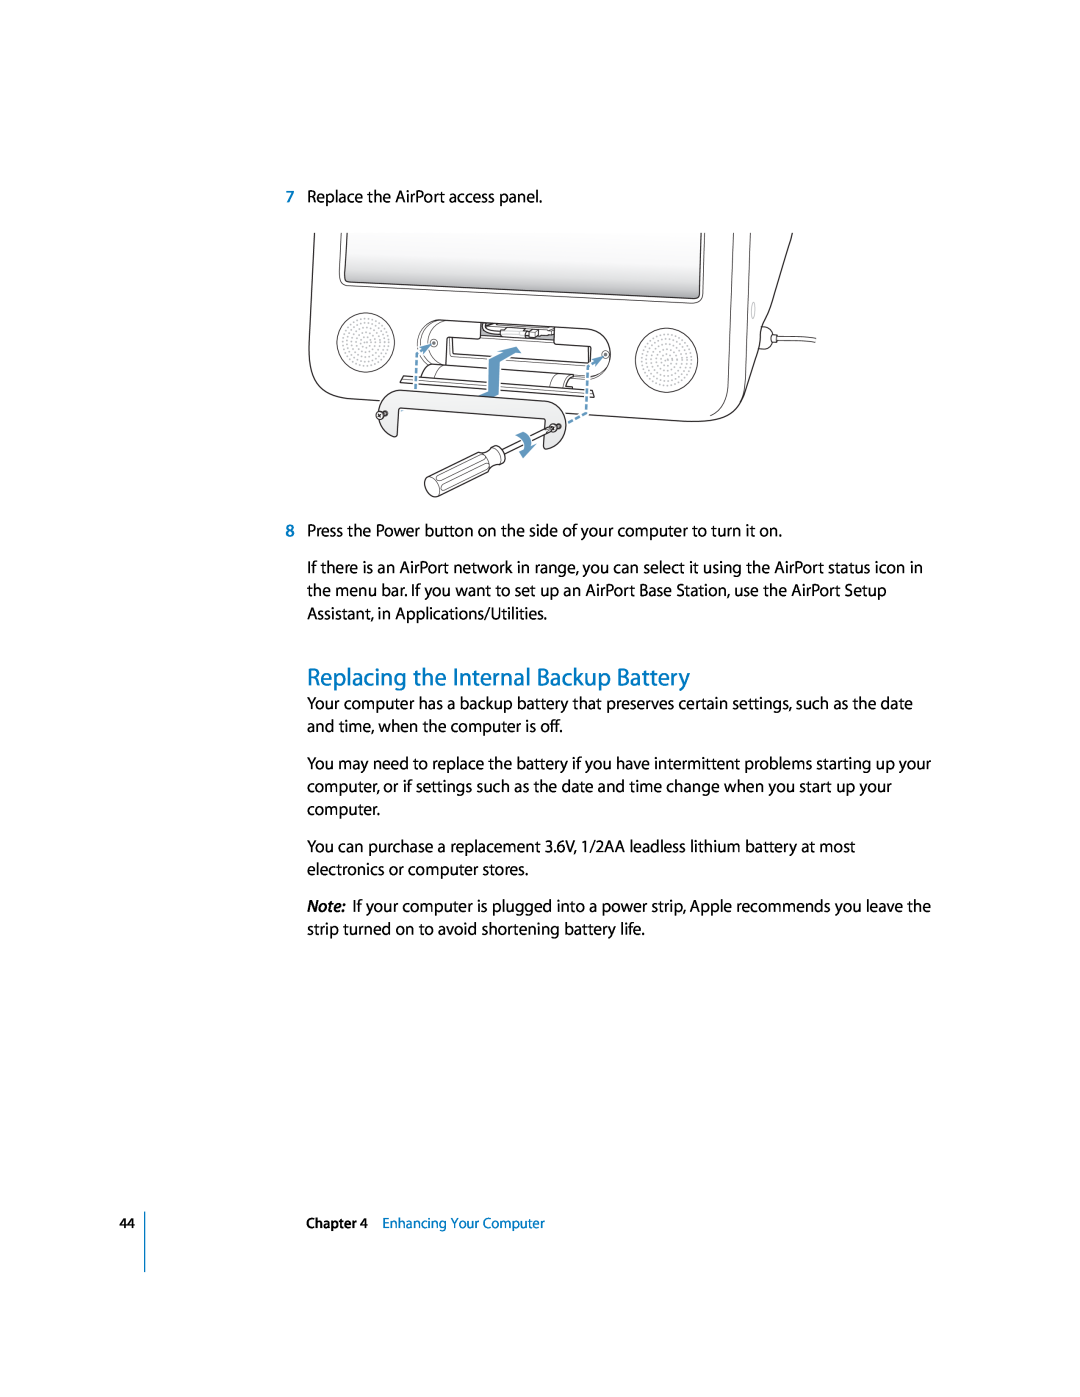 Apple EMac manual Replacing the Internal Backup Battery 